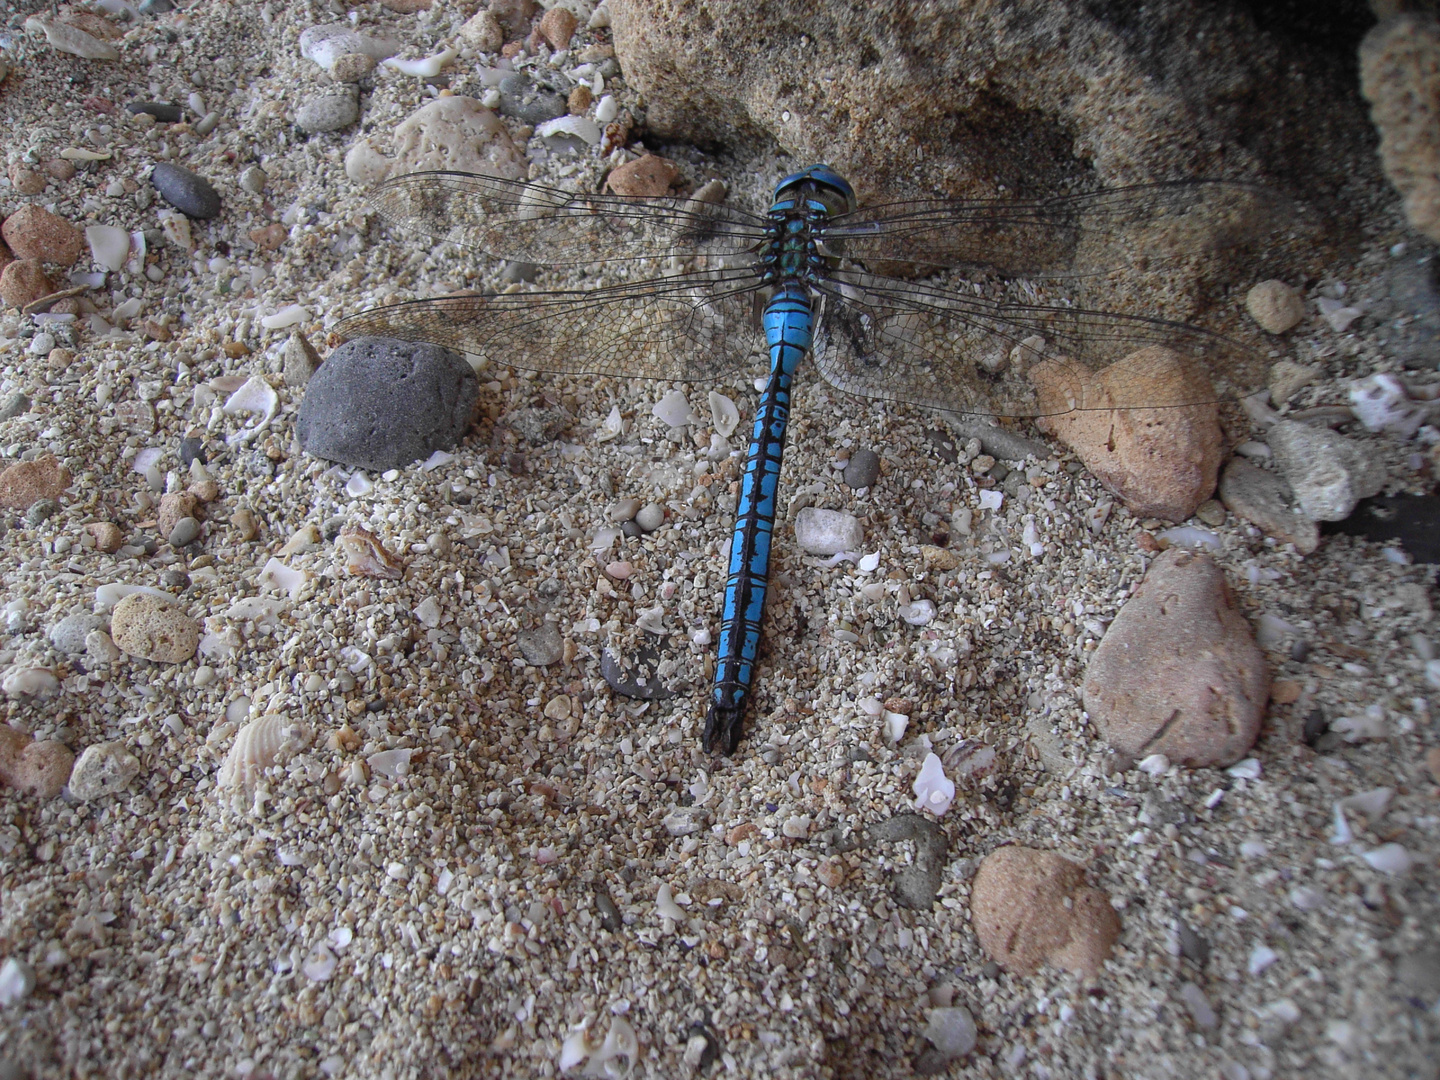 Blaue Libelle auf Mallorca